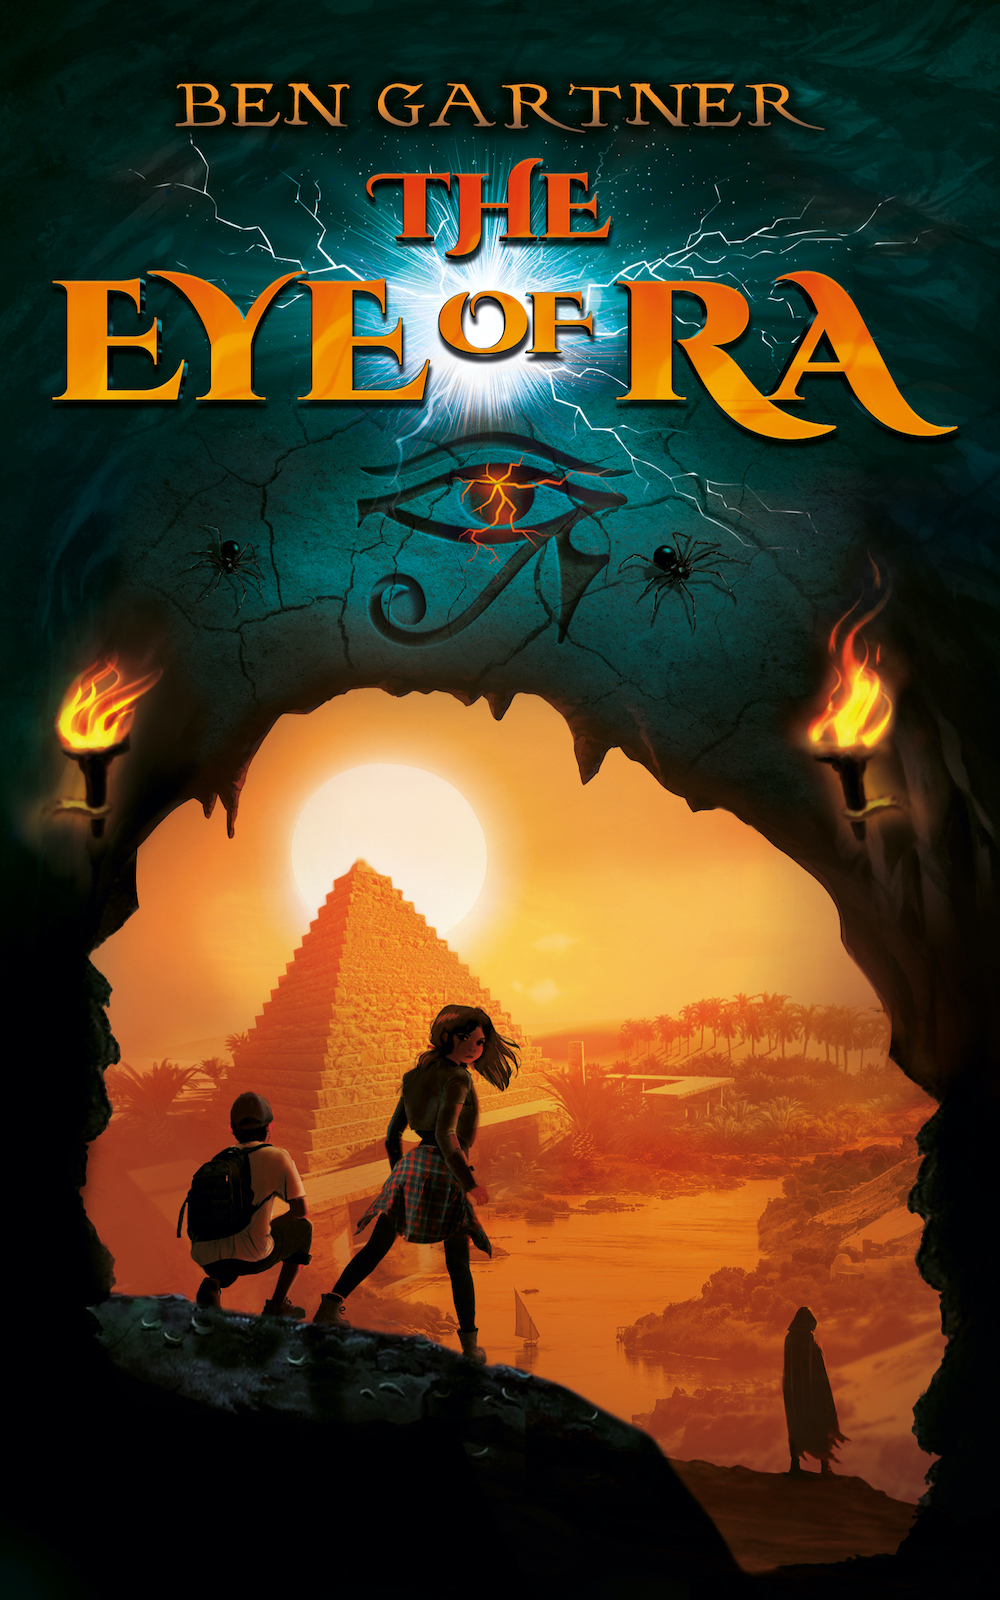 FREE: The Eye of Ra by Ben Gartner